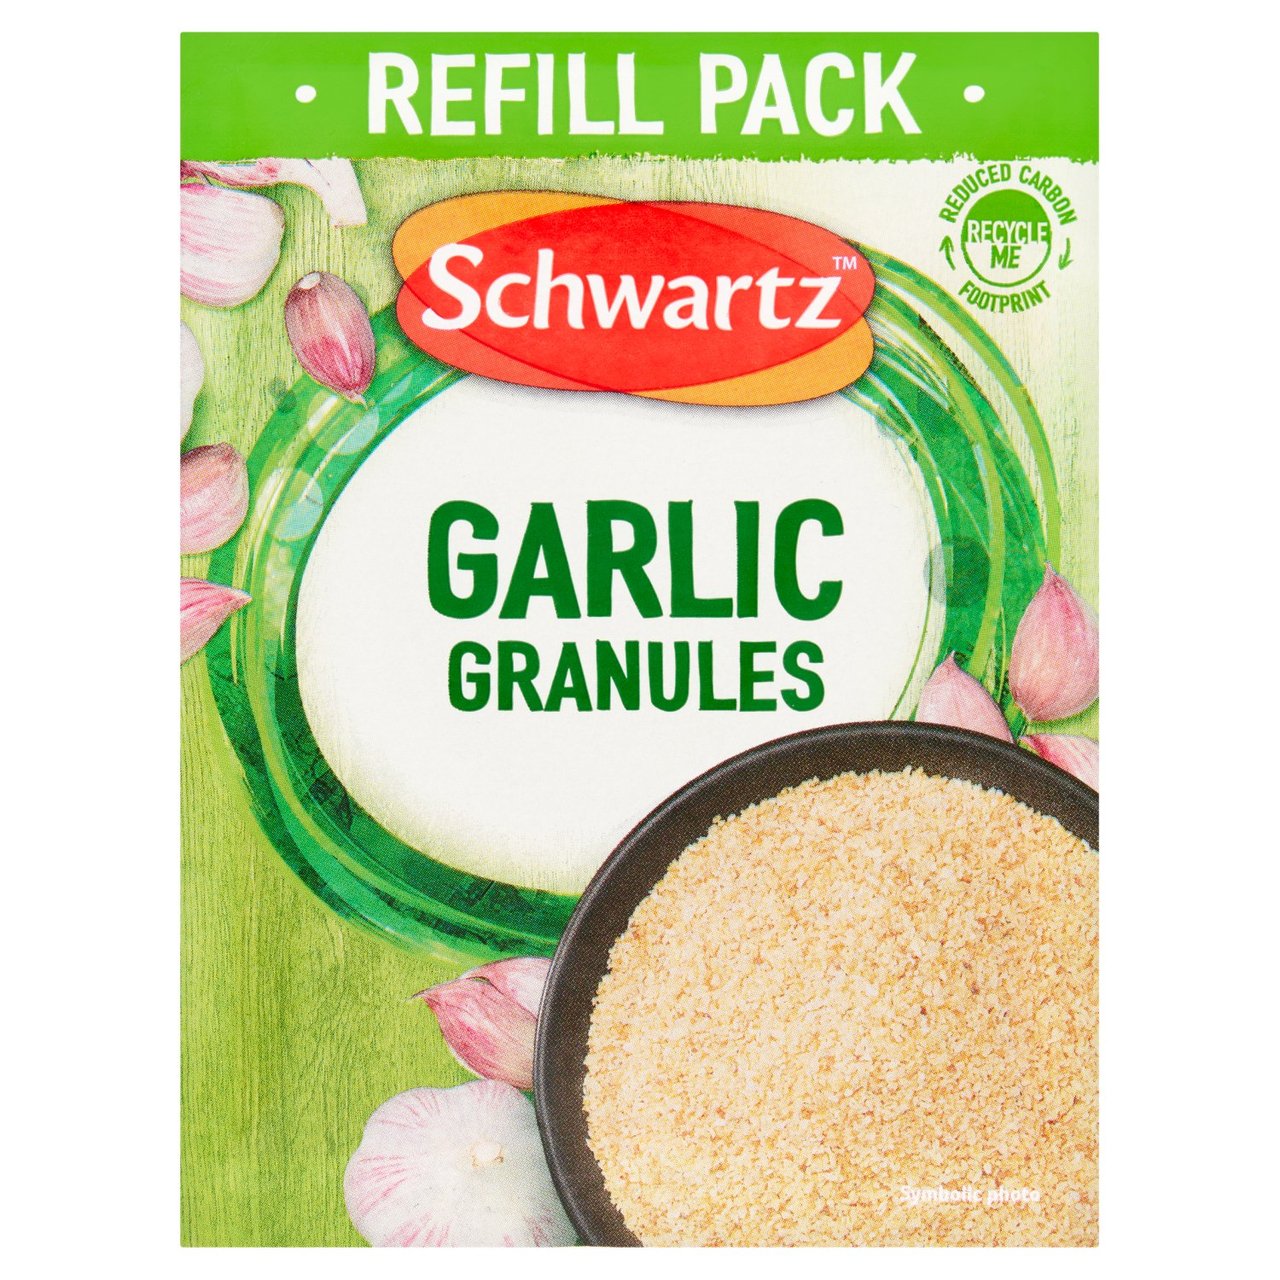 Schwartz Garlic Granules Refill Pack